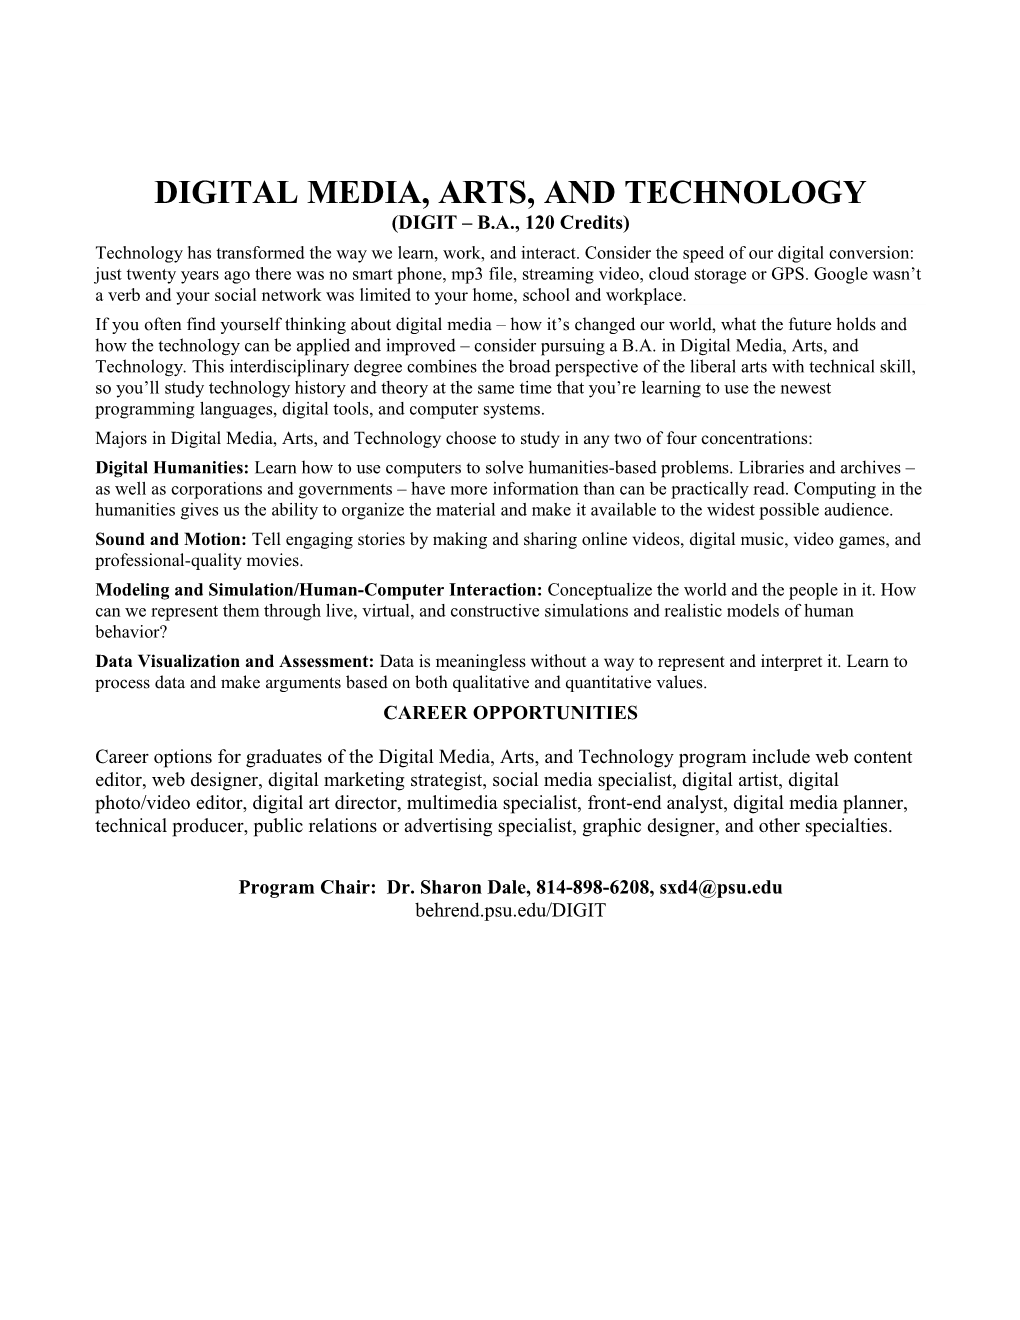 Digital Media, Arts, and Technology